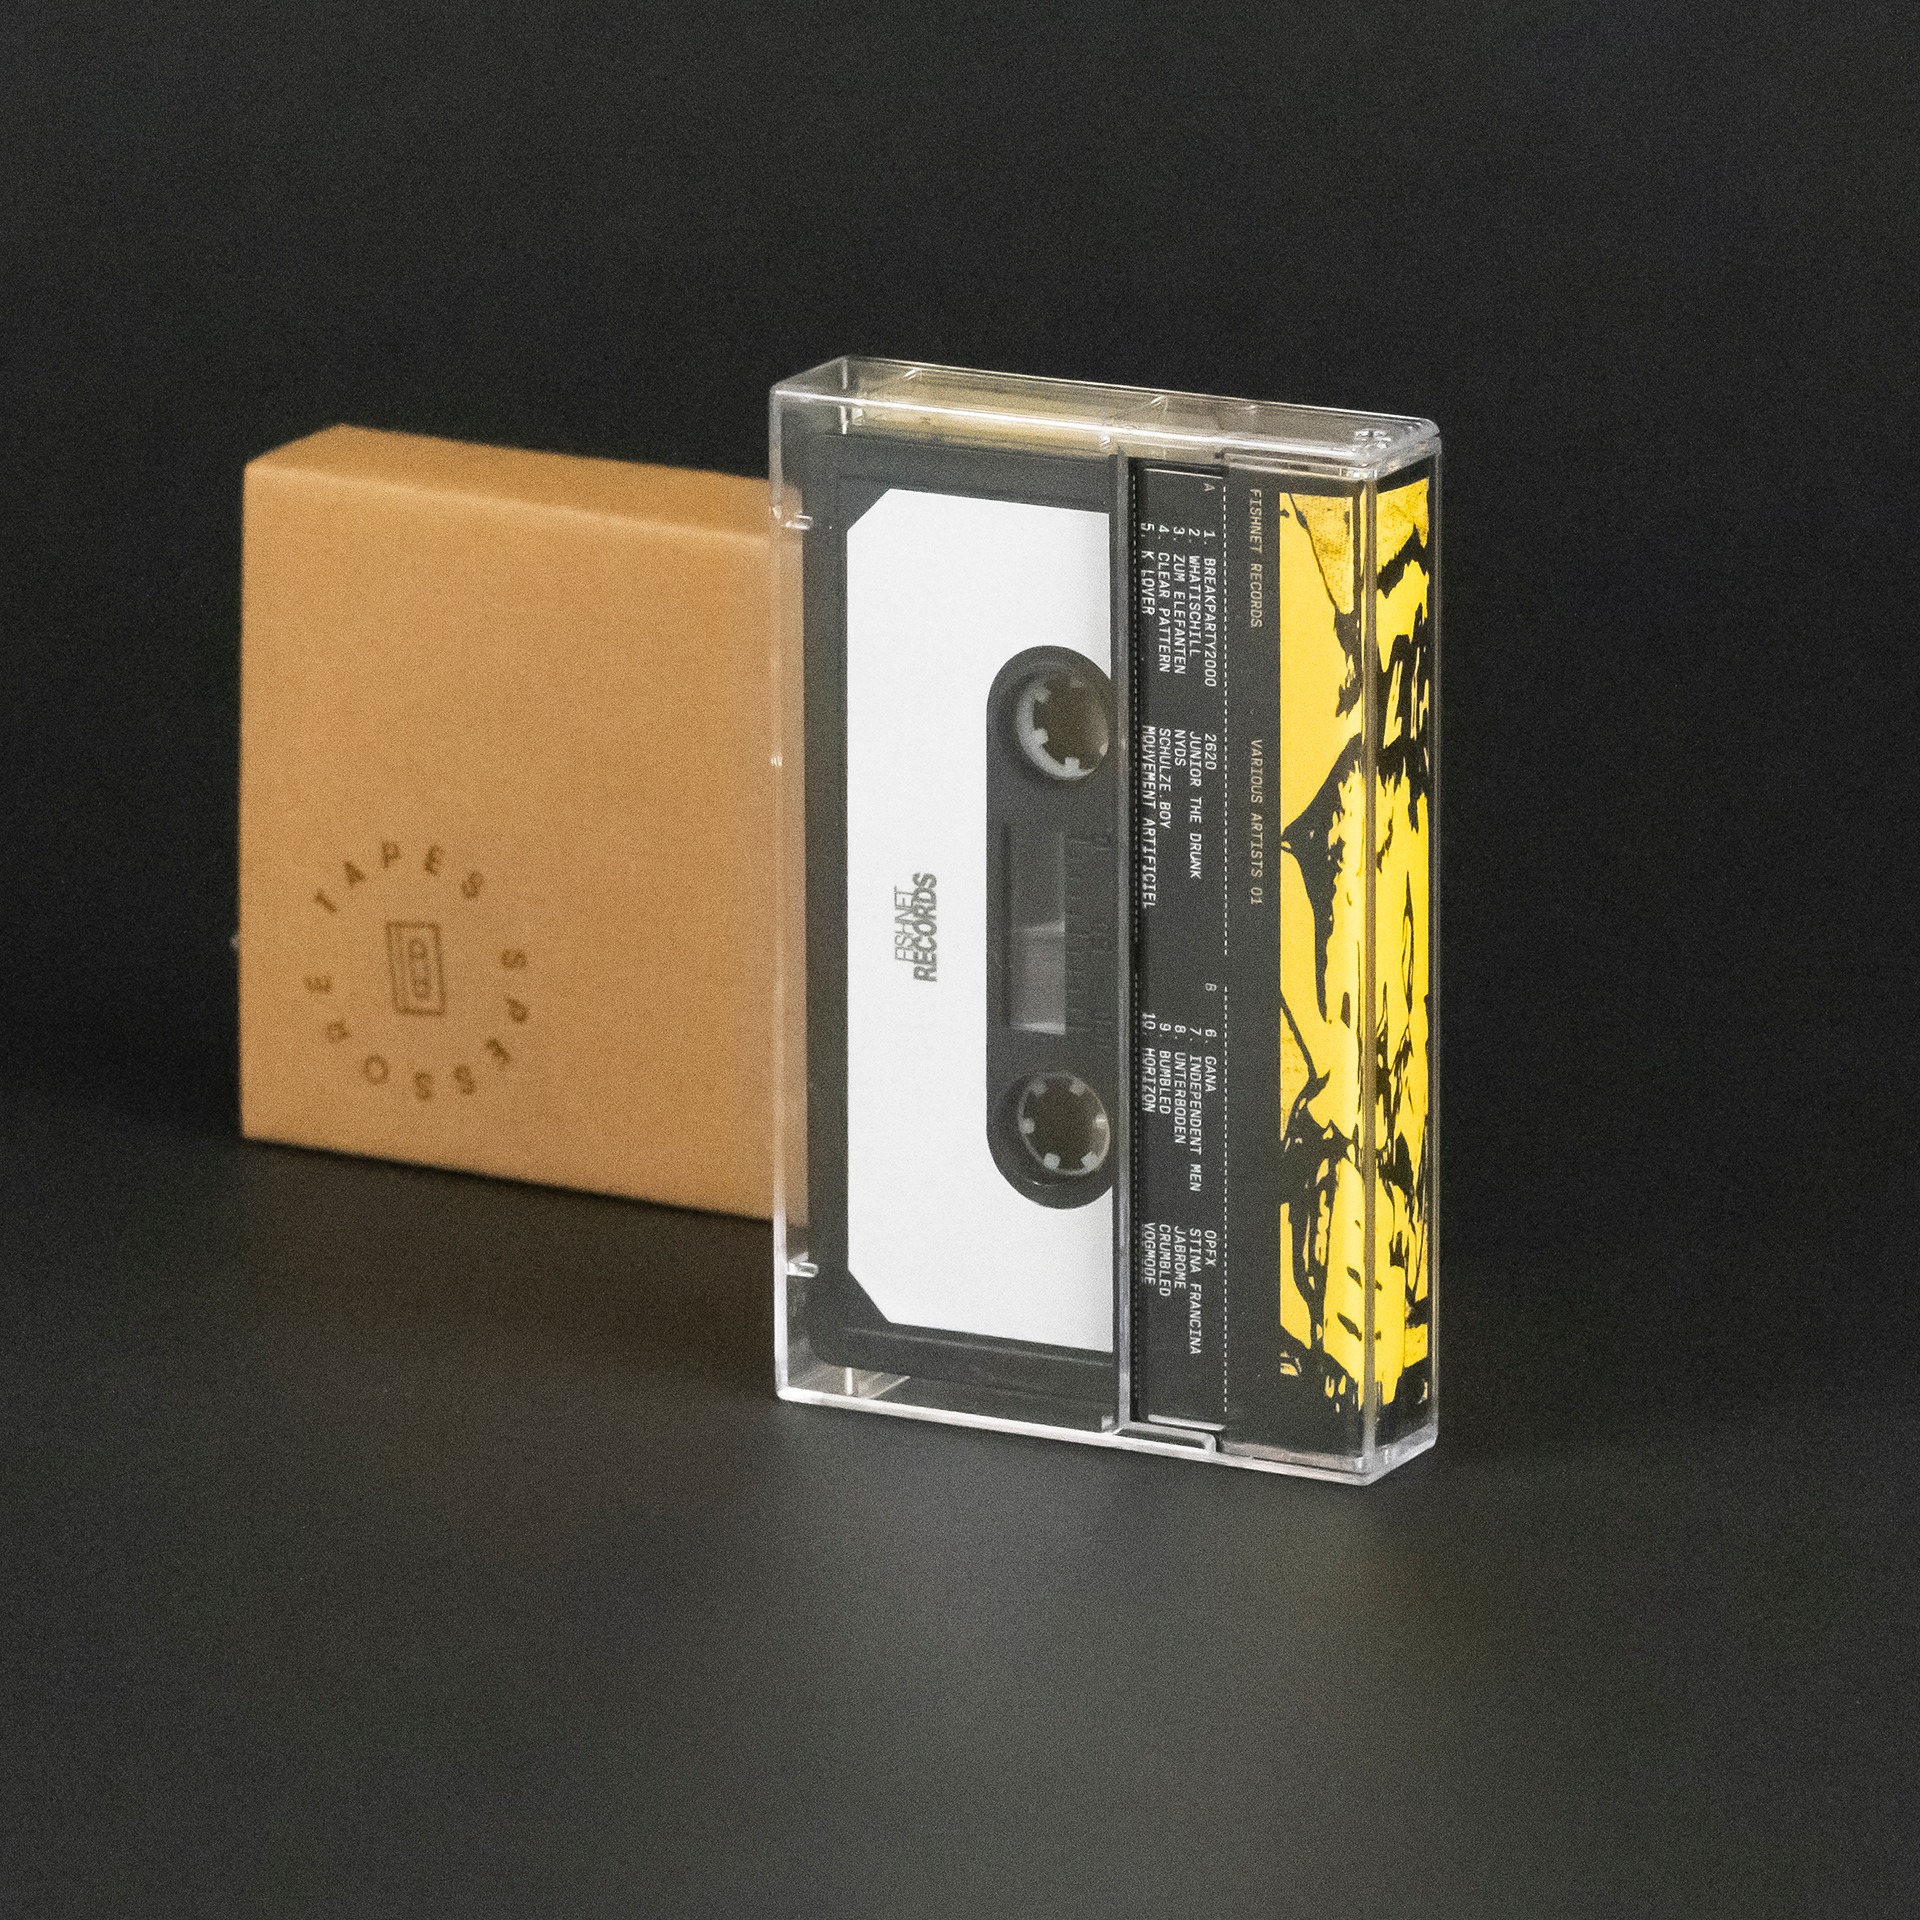 Release: Fishnet Records VA 01 Cassette Tapes - Fishnet Collective